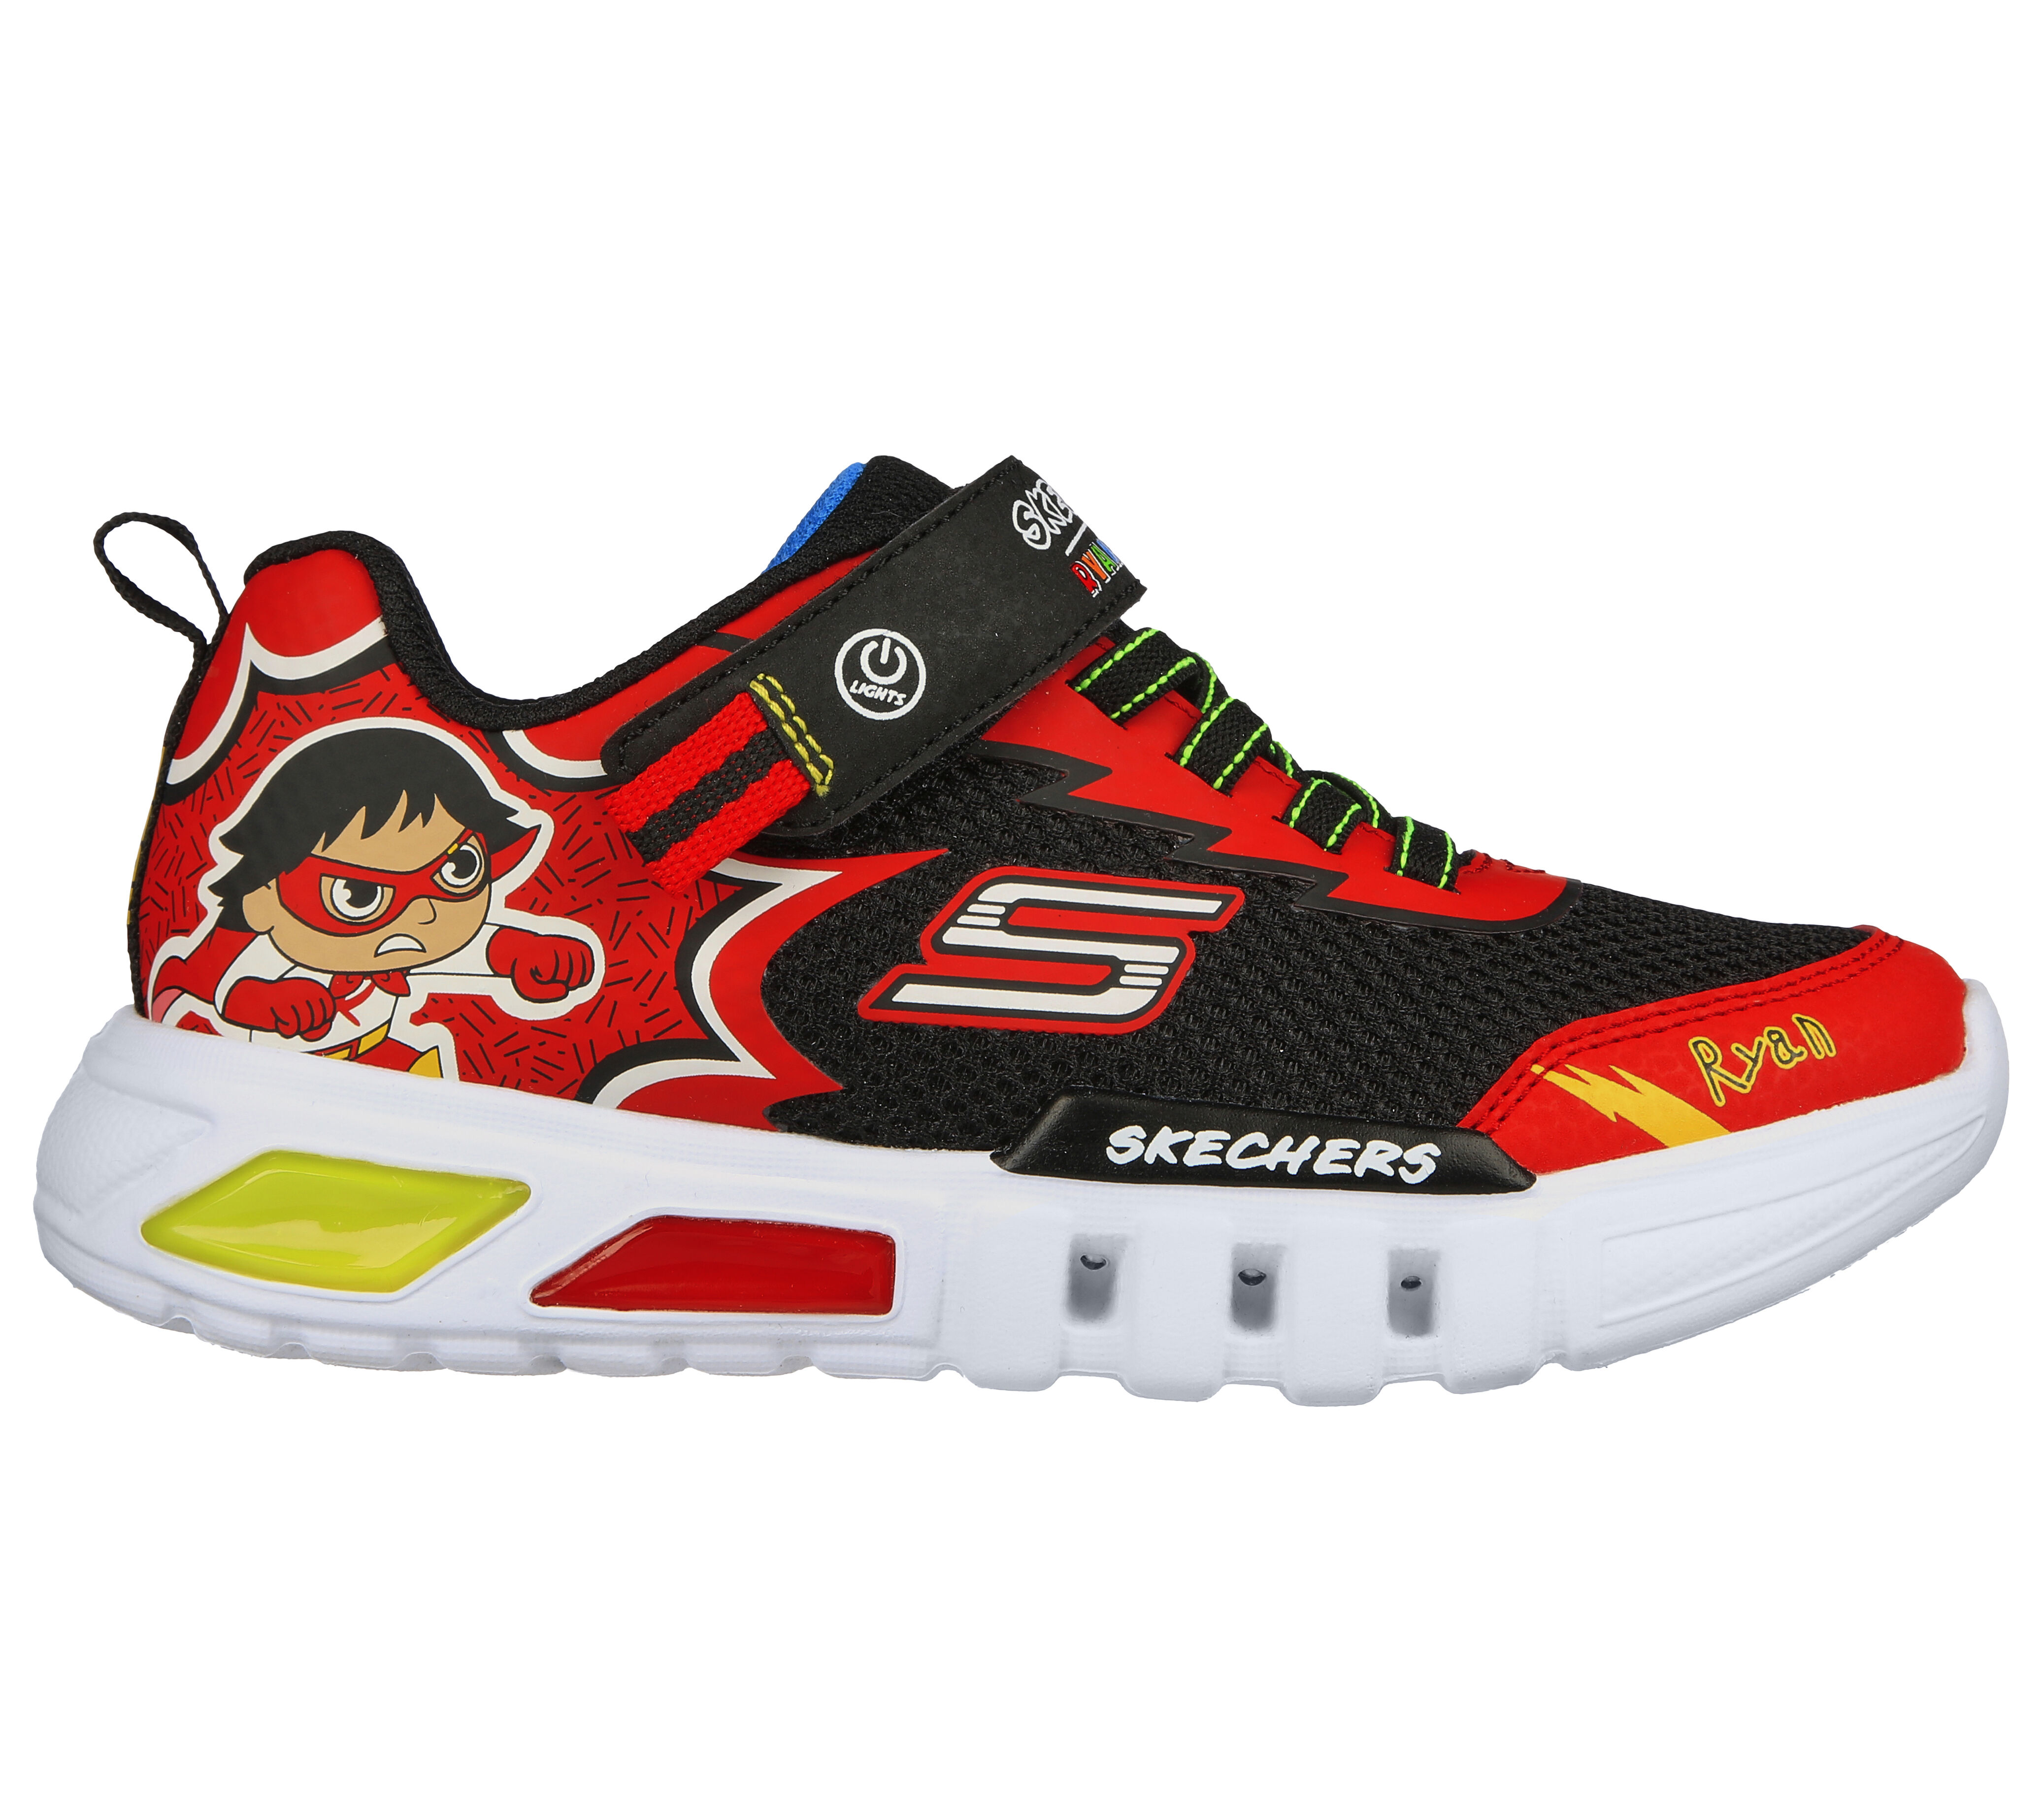 Disney Big Hero 6 Boy's Black/White/Red Sneaker Shoes Light Up Size 9 